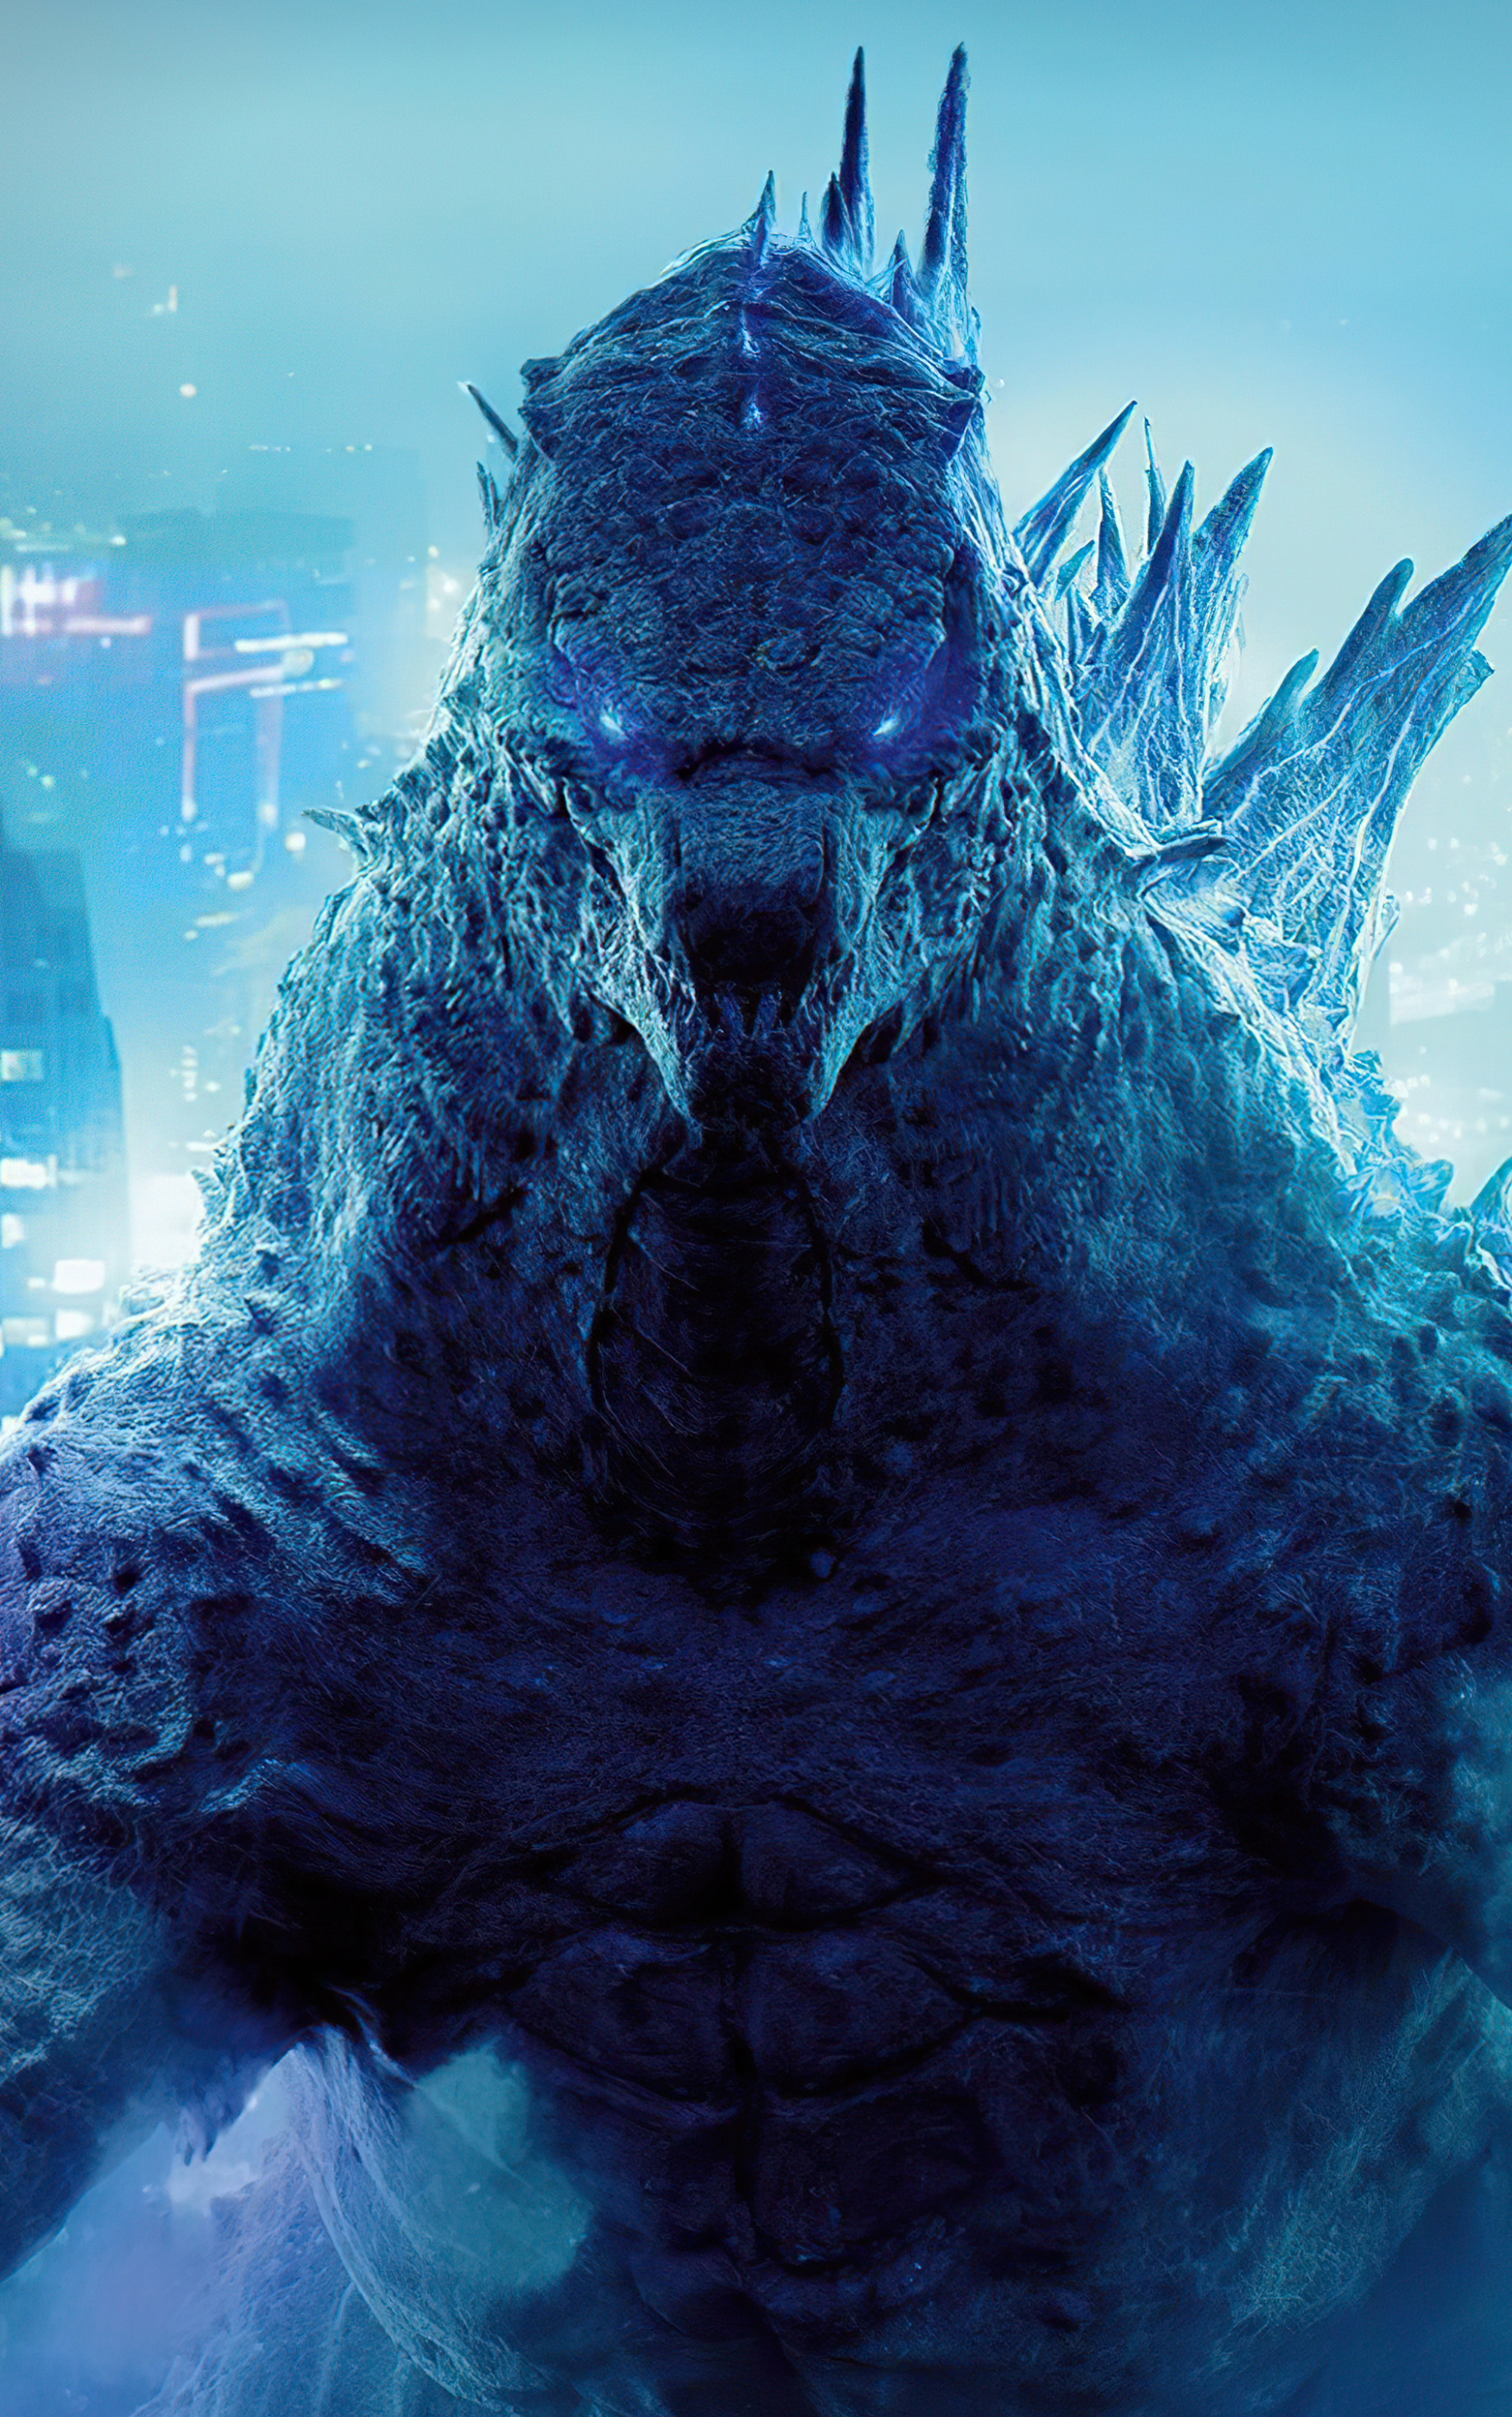 Baixar papel de parede para celular de Filme, Godzilla, Godzilla (Monstroverso), Godzilla Vs Kong gratuito.